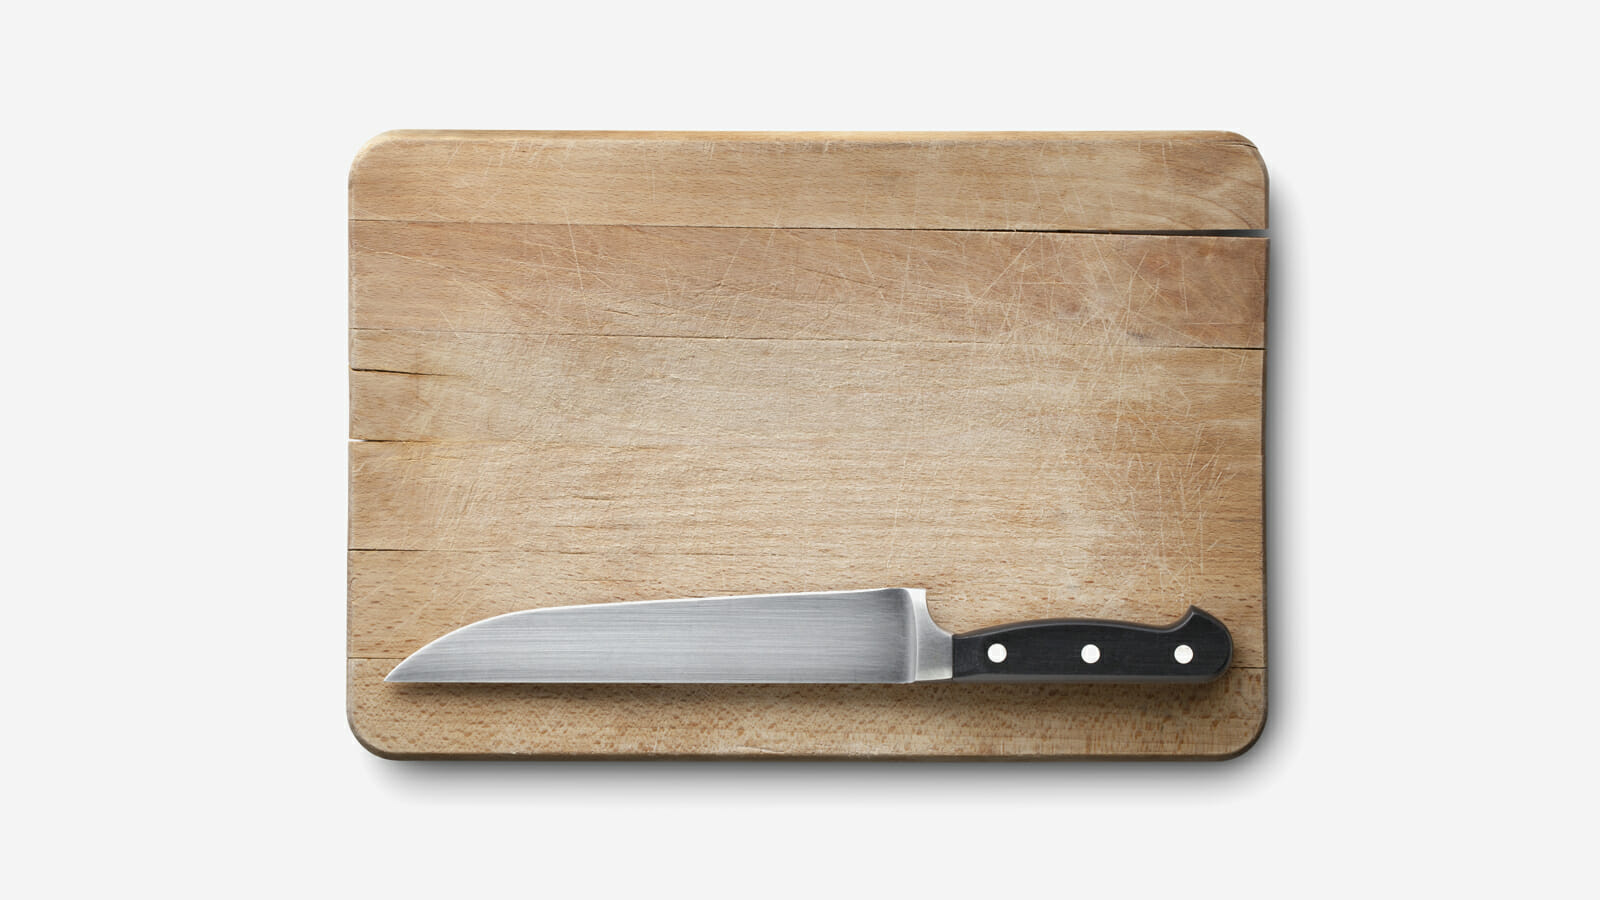 Knife on cutting board